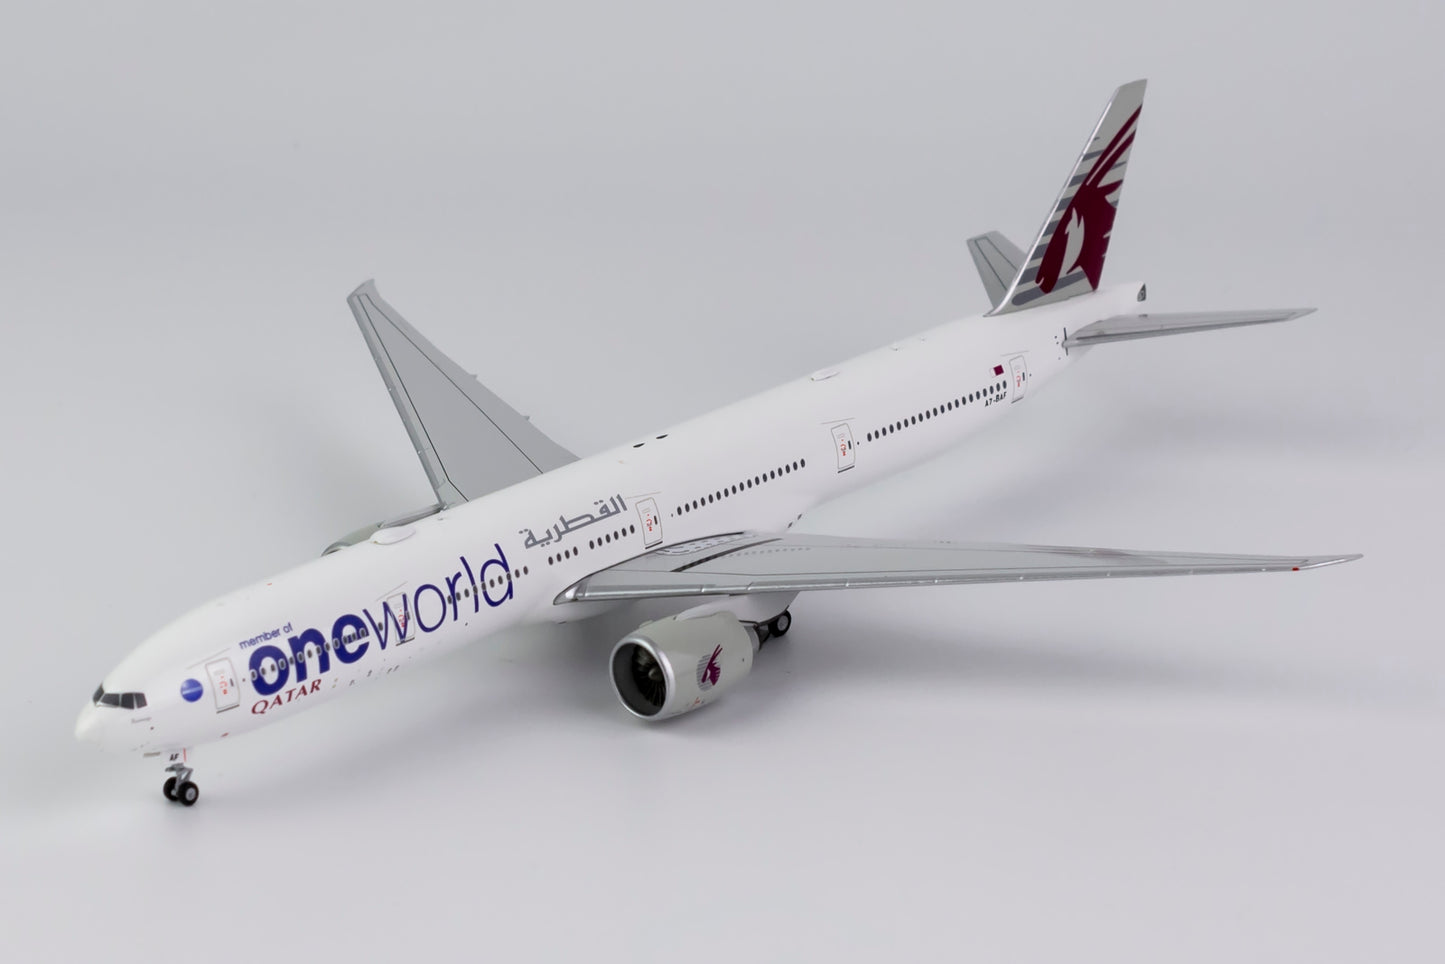 1:400 NG Models Qatar Airways Boeing 777-300ER "One World" A7-BAF NG73013